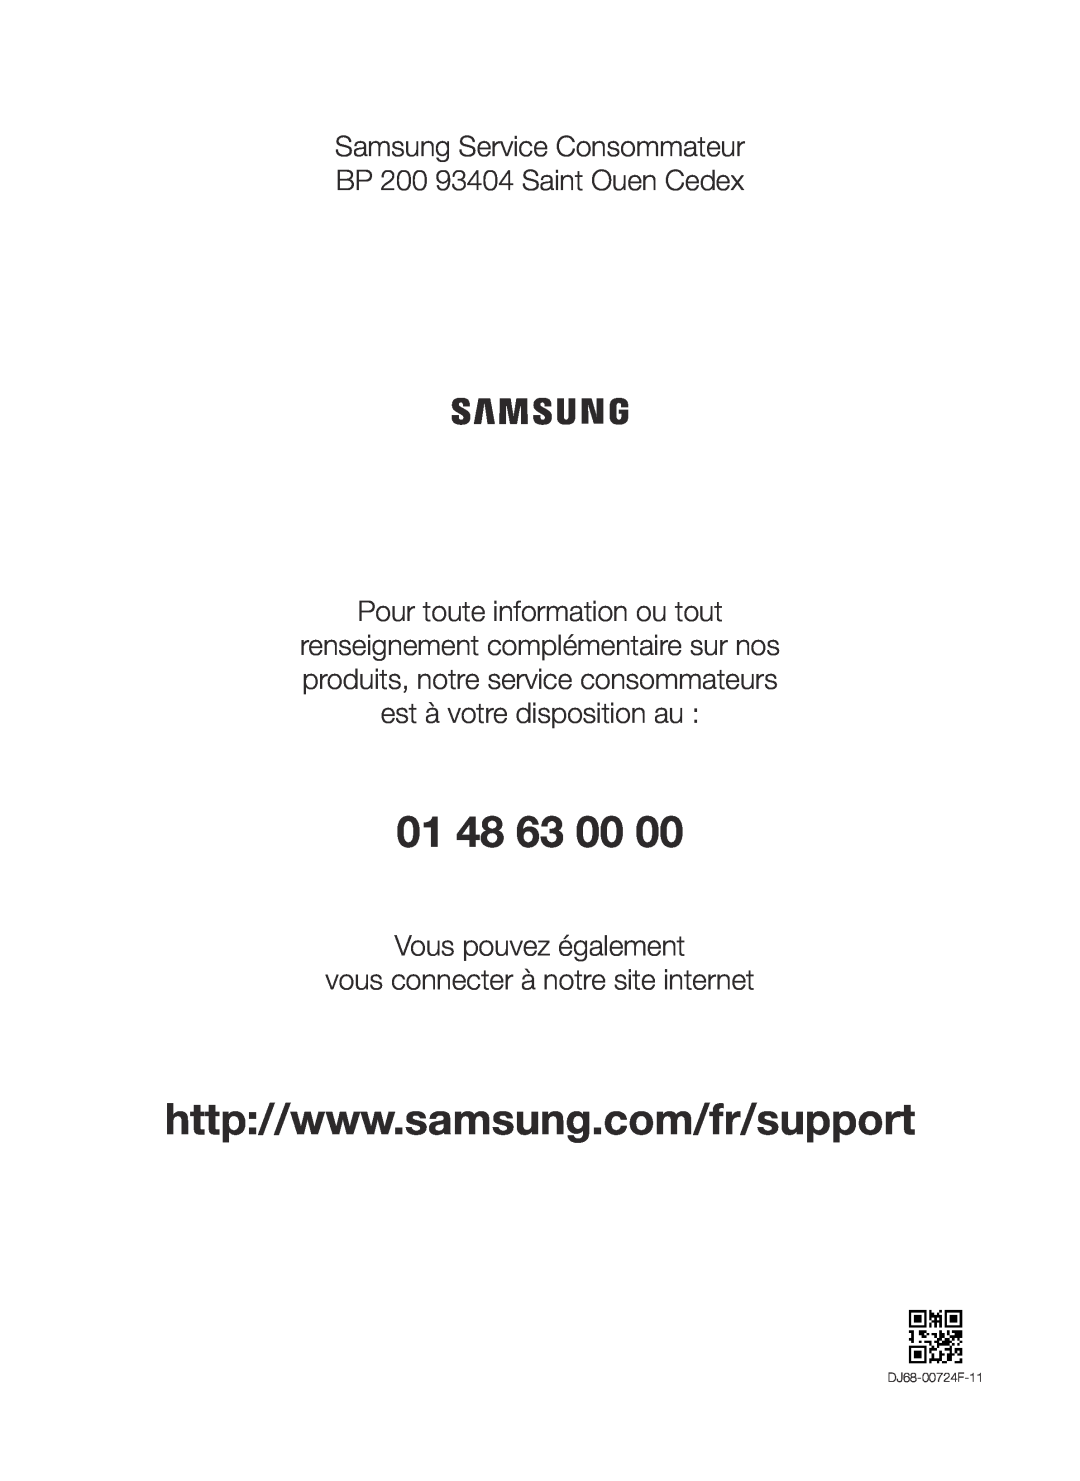 Samsung VC07K41F0HG/EF manual 01 48 63 00, Samsung Service Consommateur BP 200 93404 Saint Ouen Cedex, DJ68-00724F-11 